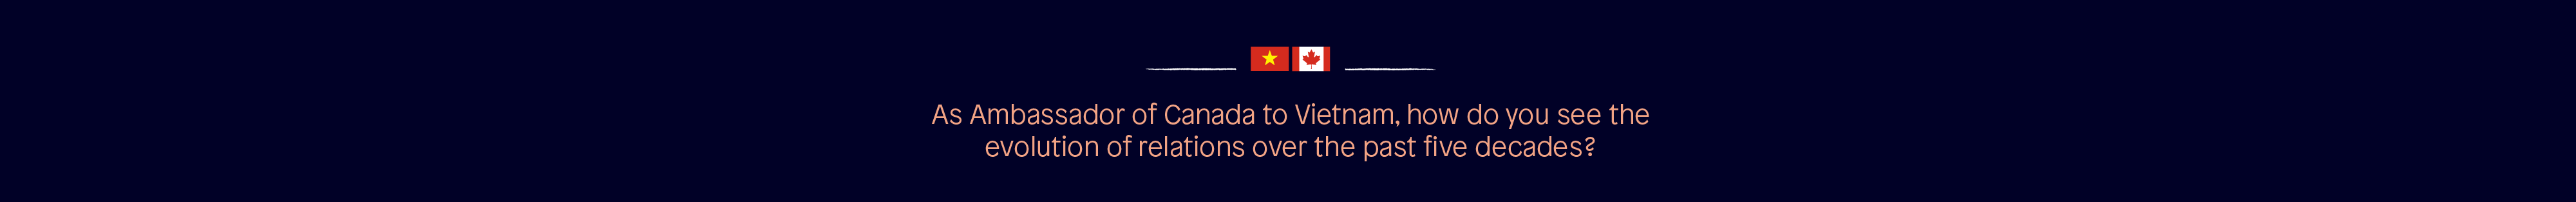 Vietnam & Canada enhancing engagement - Ảnh 2